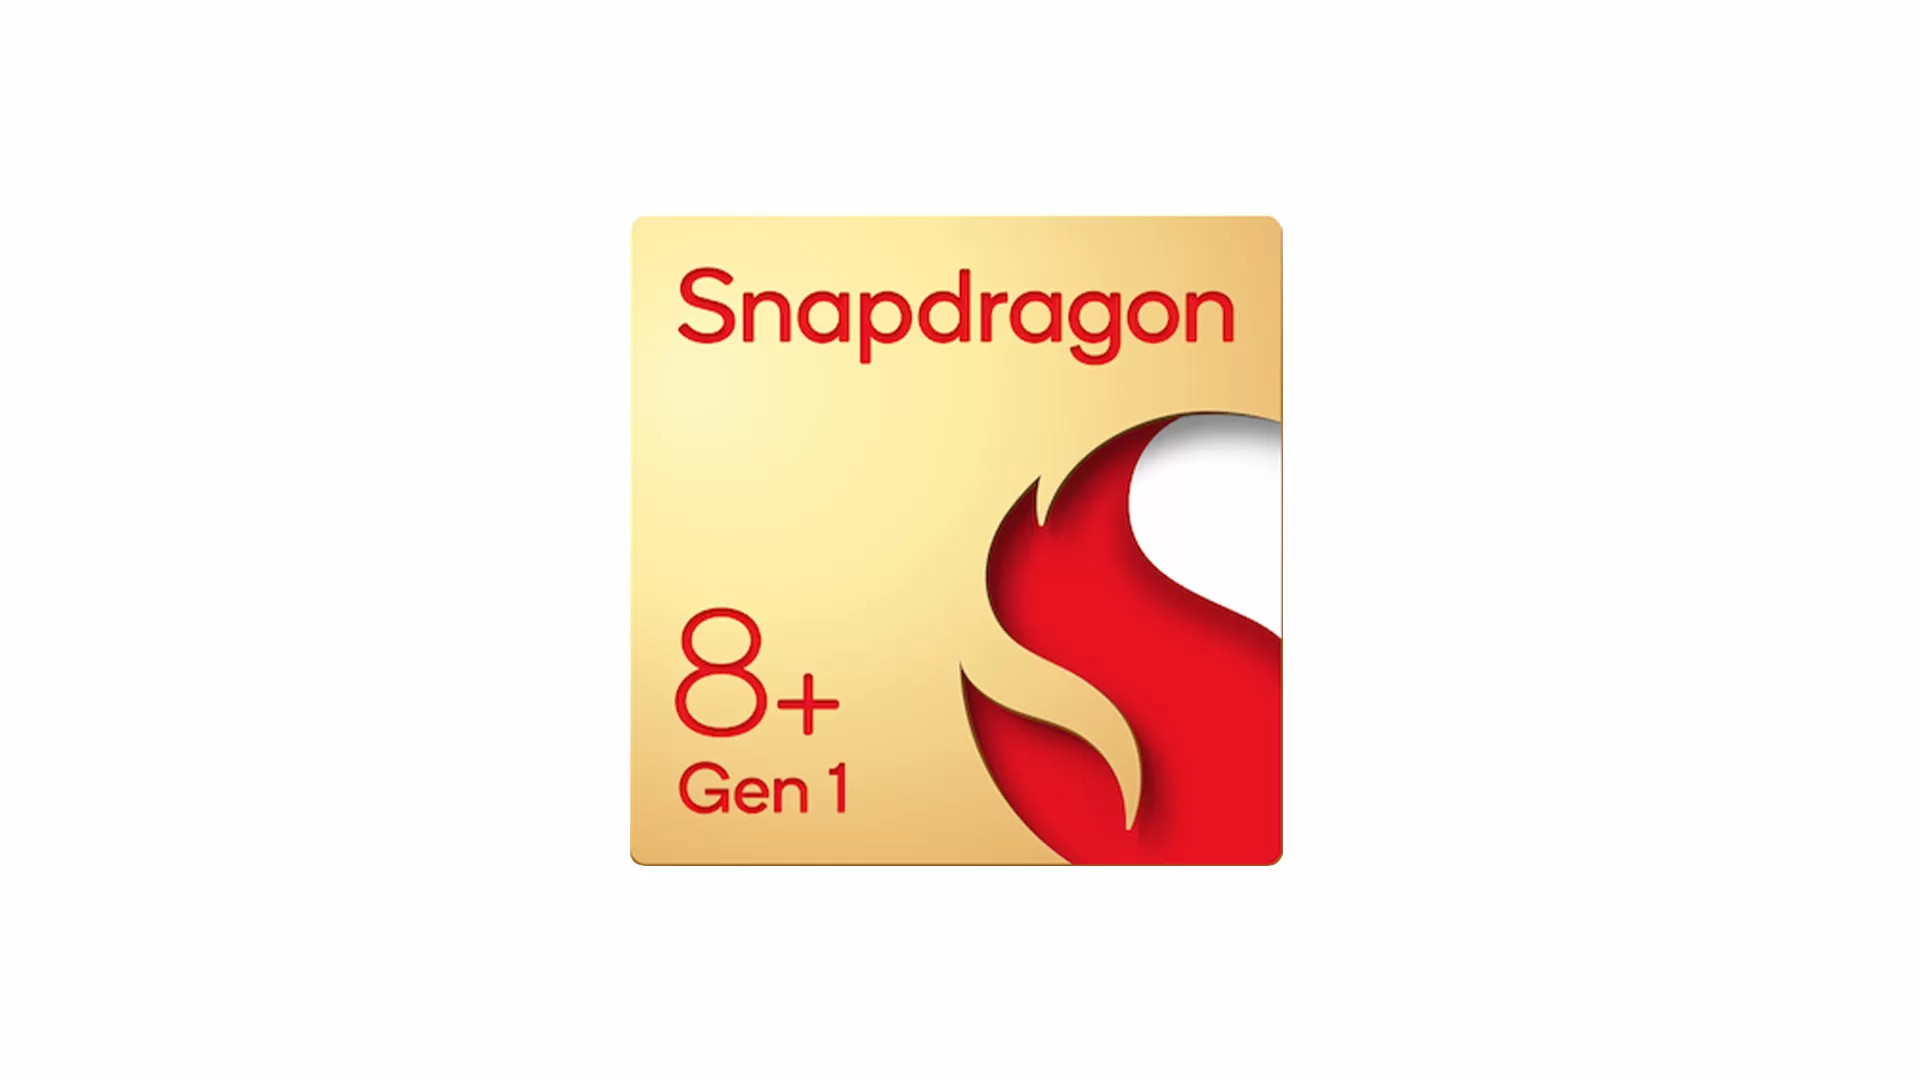 Qualcomm snapdragon 8 plus gen 1